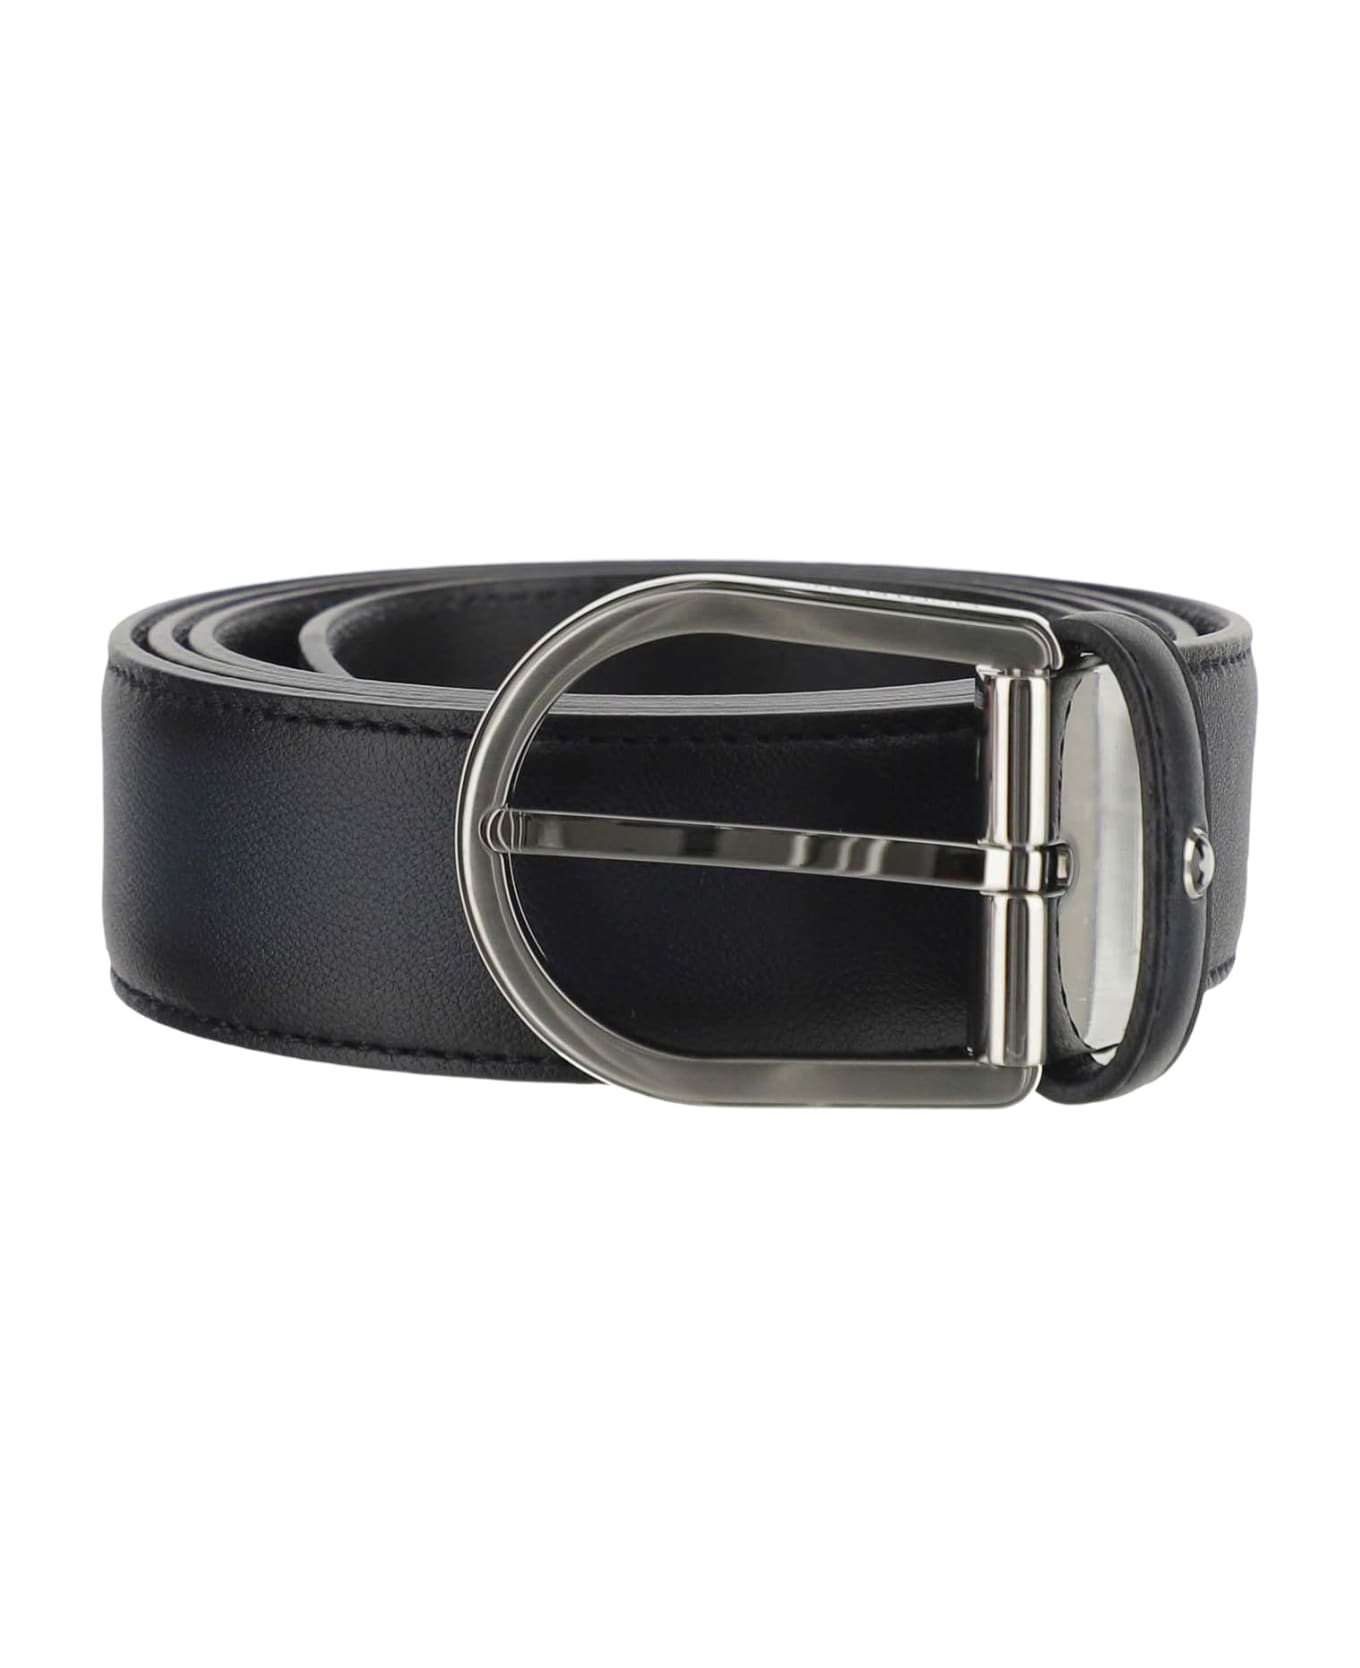 Montblanc Leather Belt With Emblem - Black ベルト